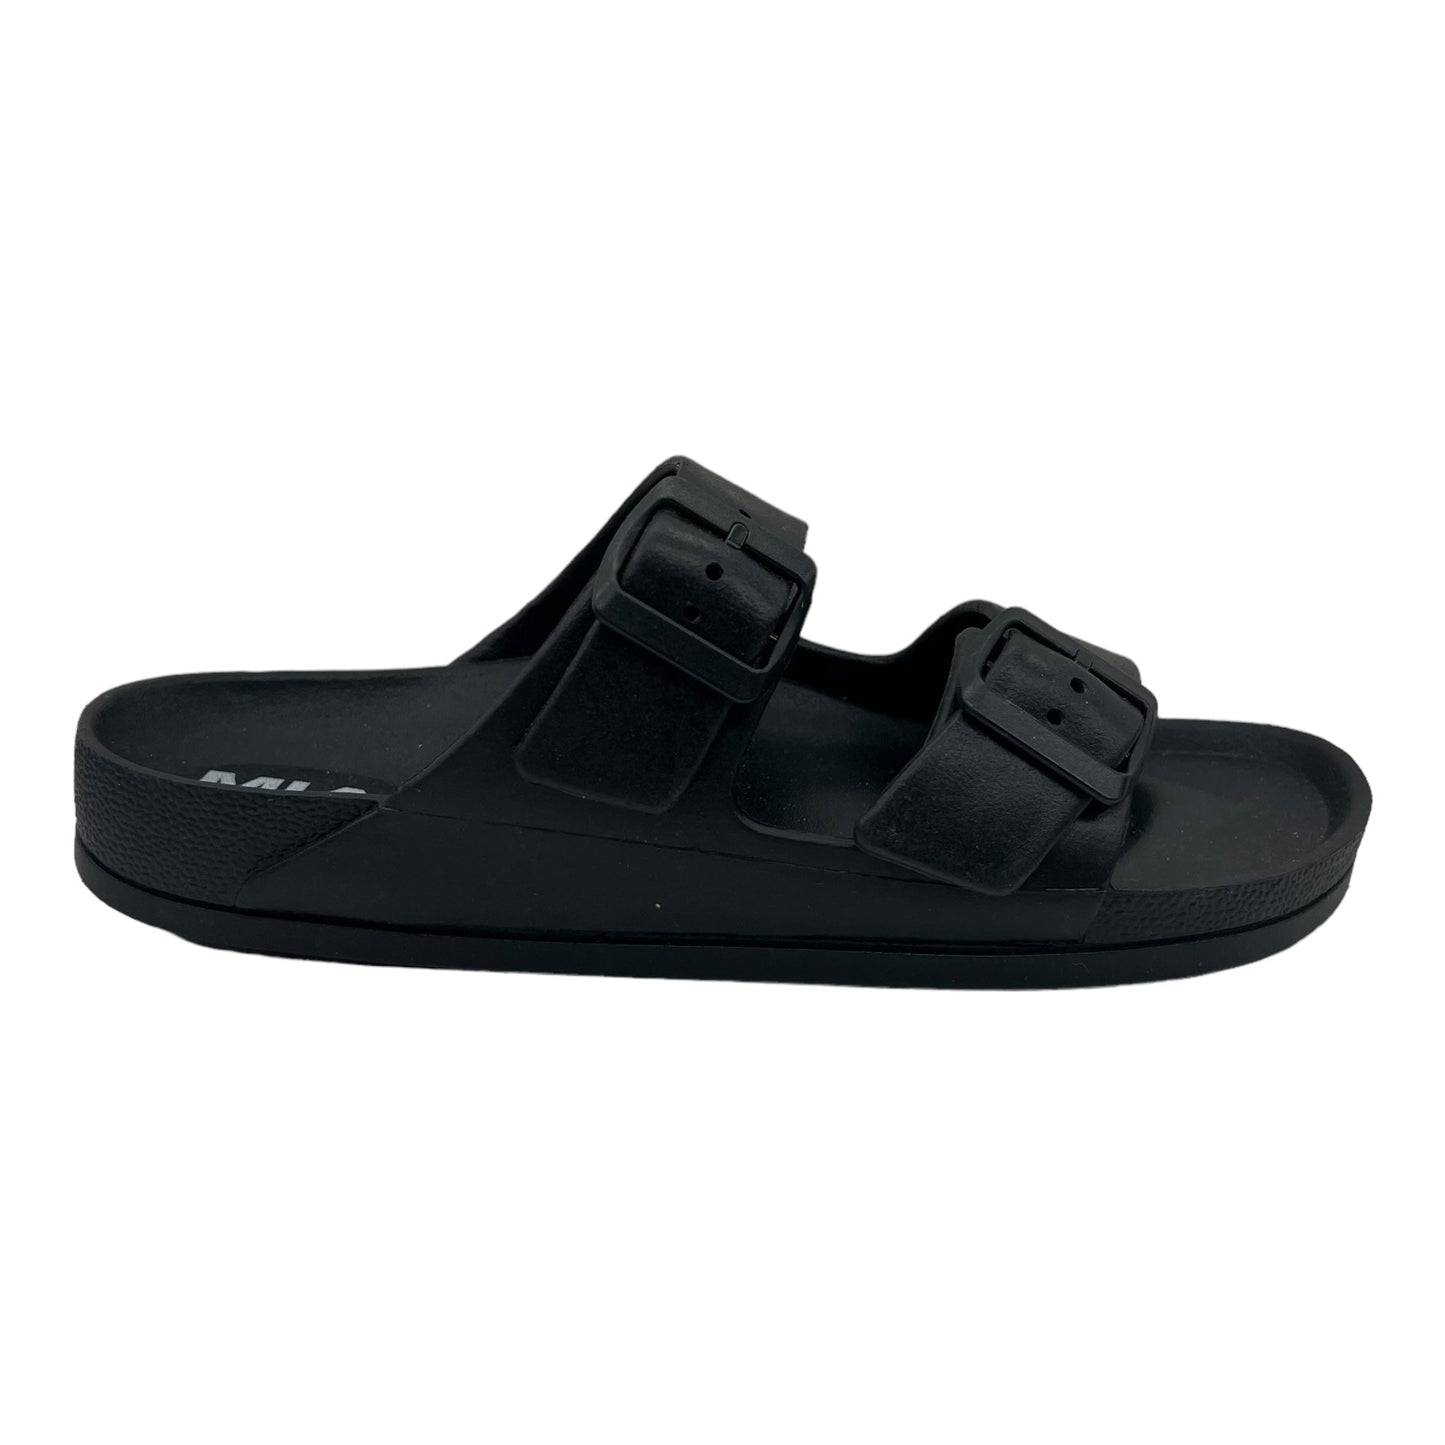 Black Sandals Flats Mia, Size 8